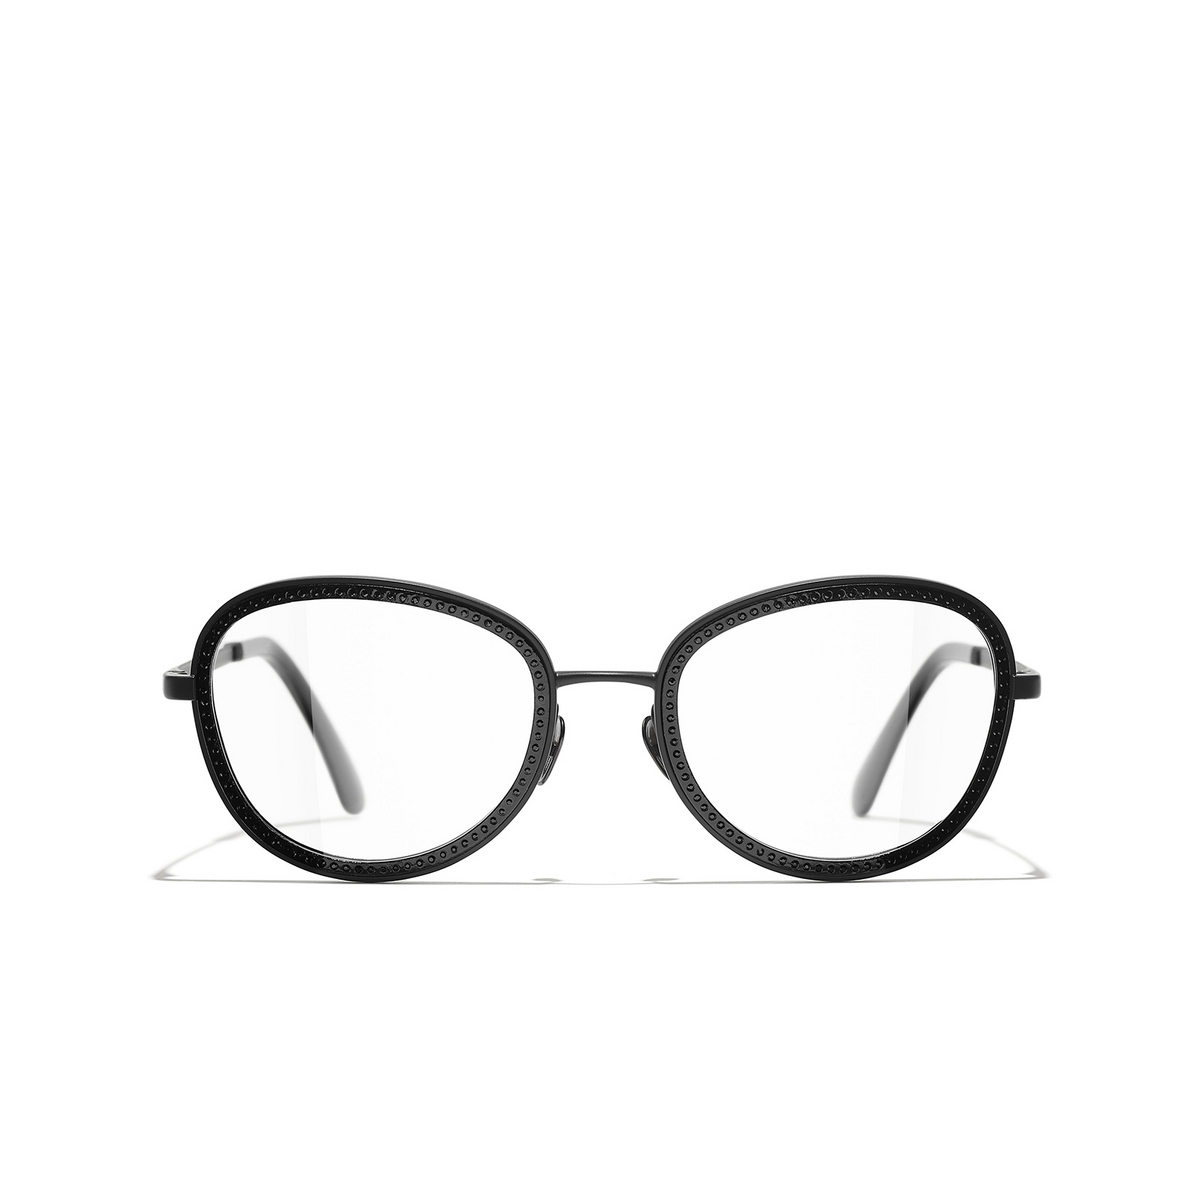 CHANEL pantos Eyeglasses C101 Black - front view